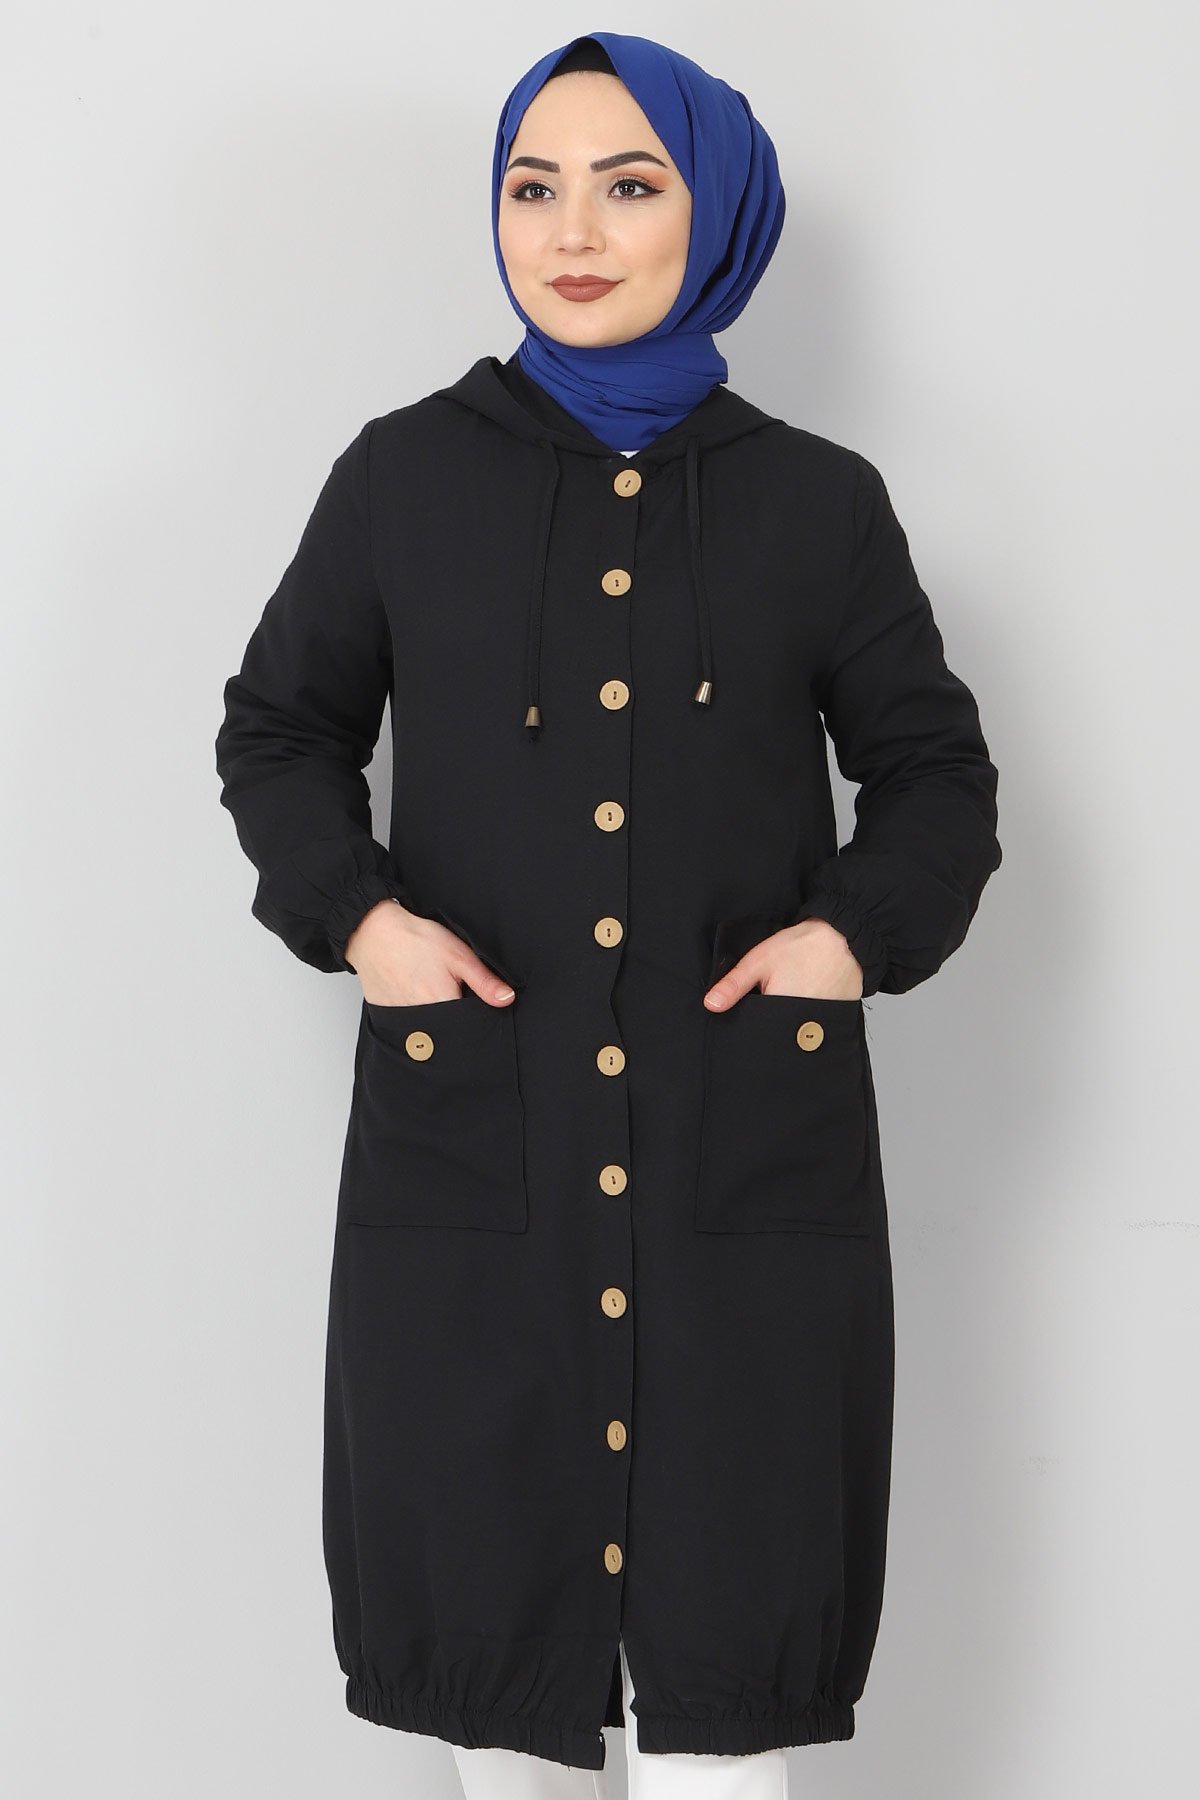 Elastic Skirt Hijab Cape TSD0080 Black